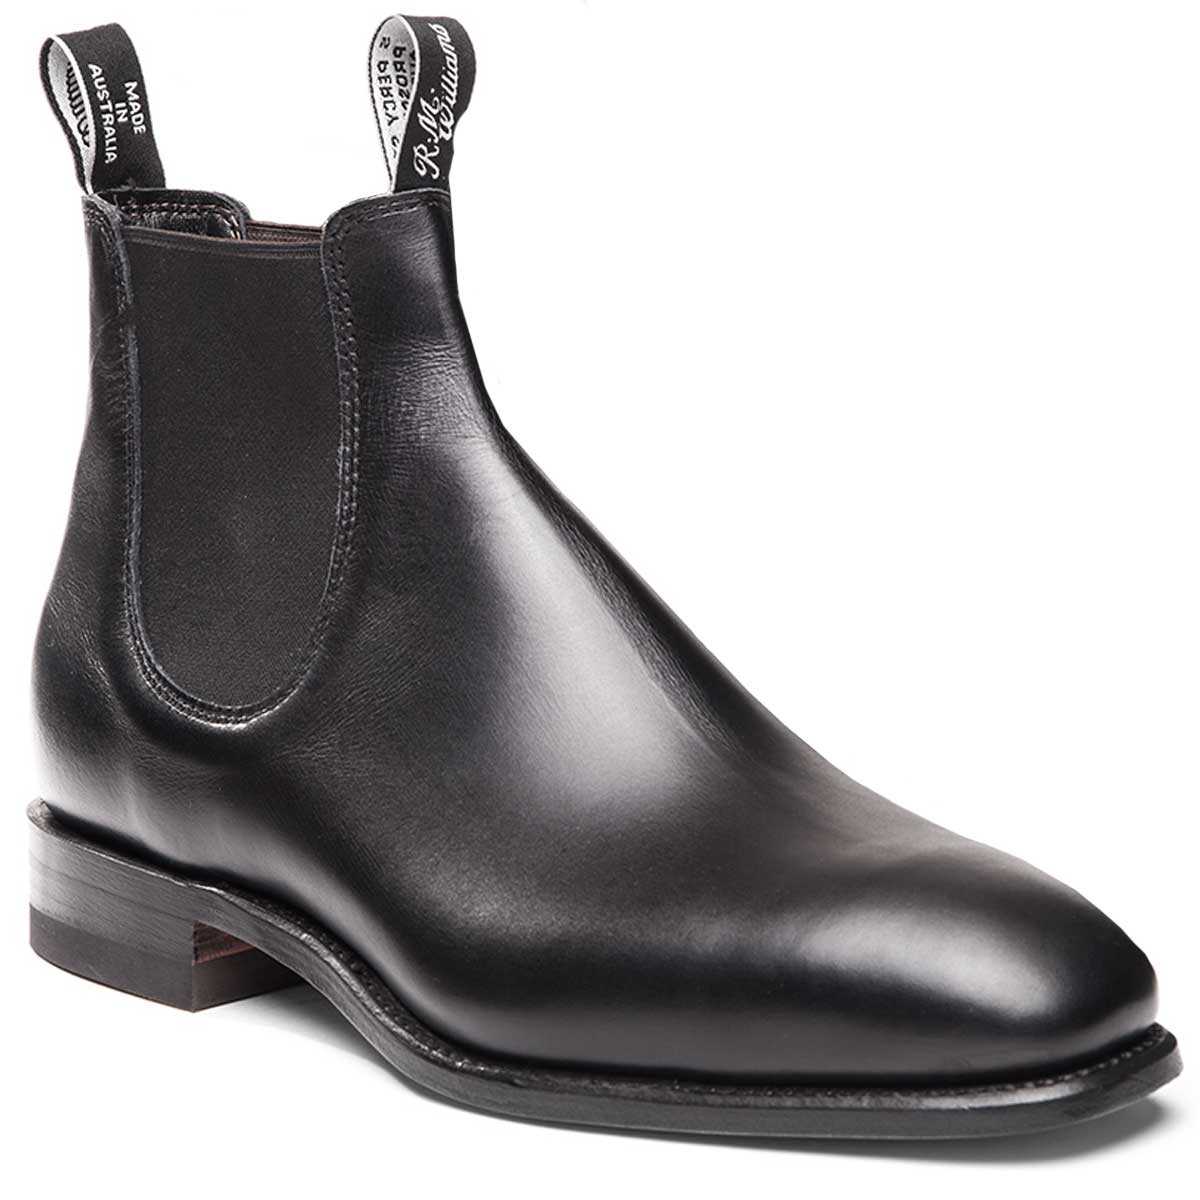 RM WILLIAMS Boots - Men's Comfort Craftsman - Black